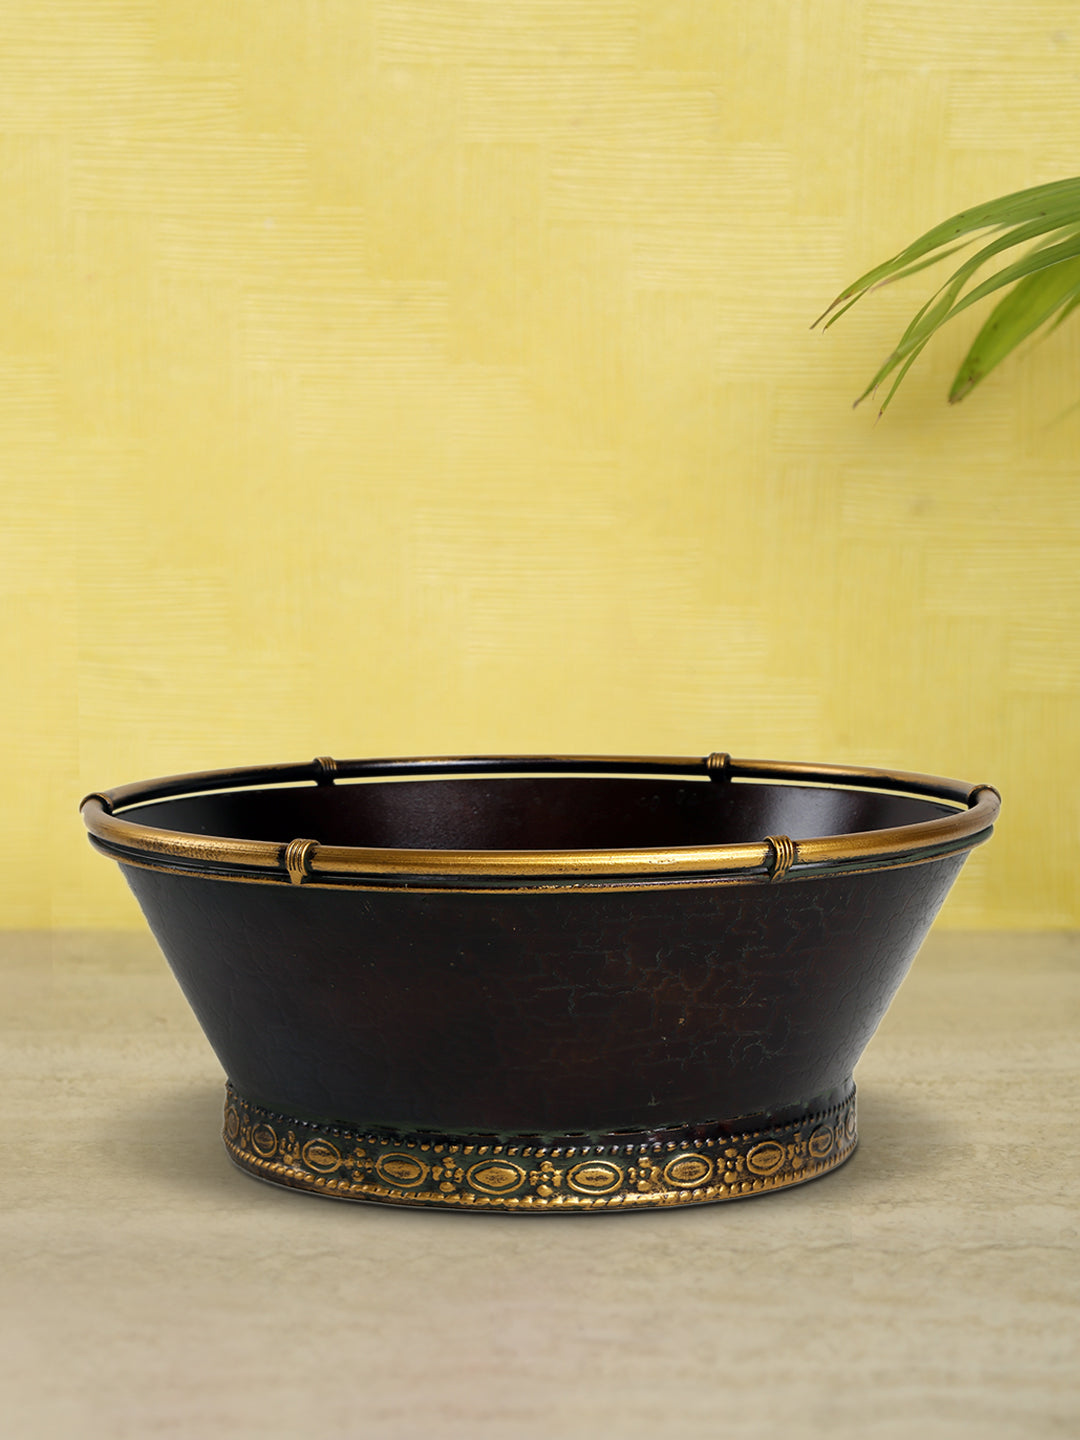 Hosley Decorative Iron Bowl